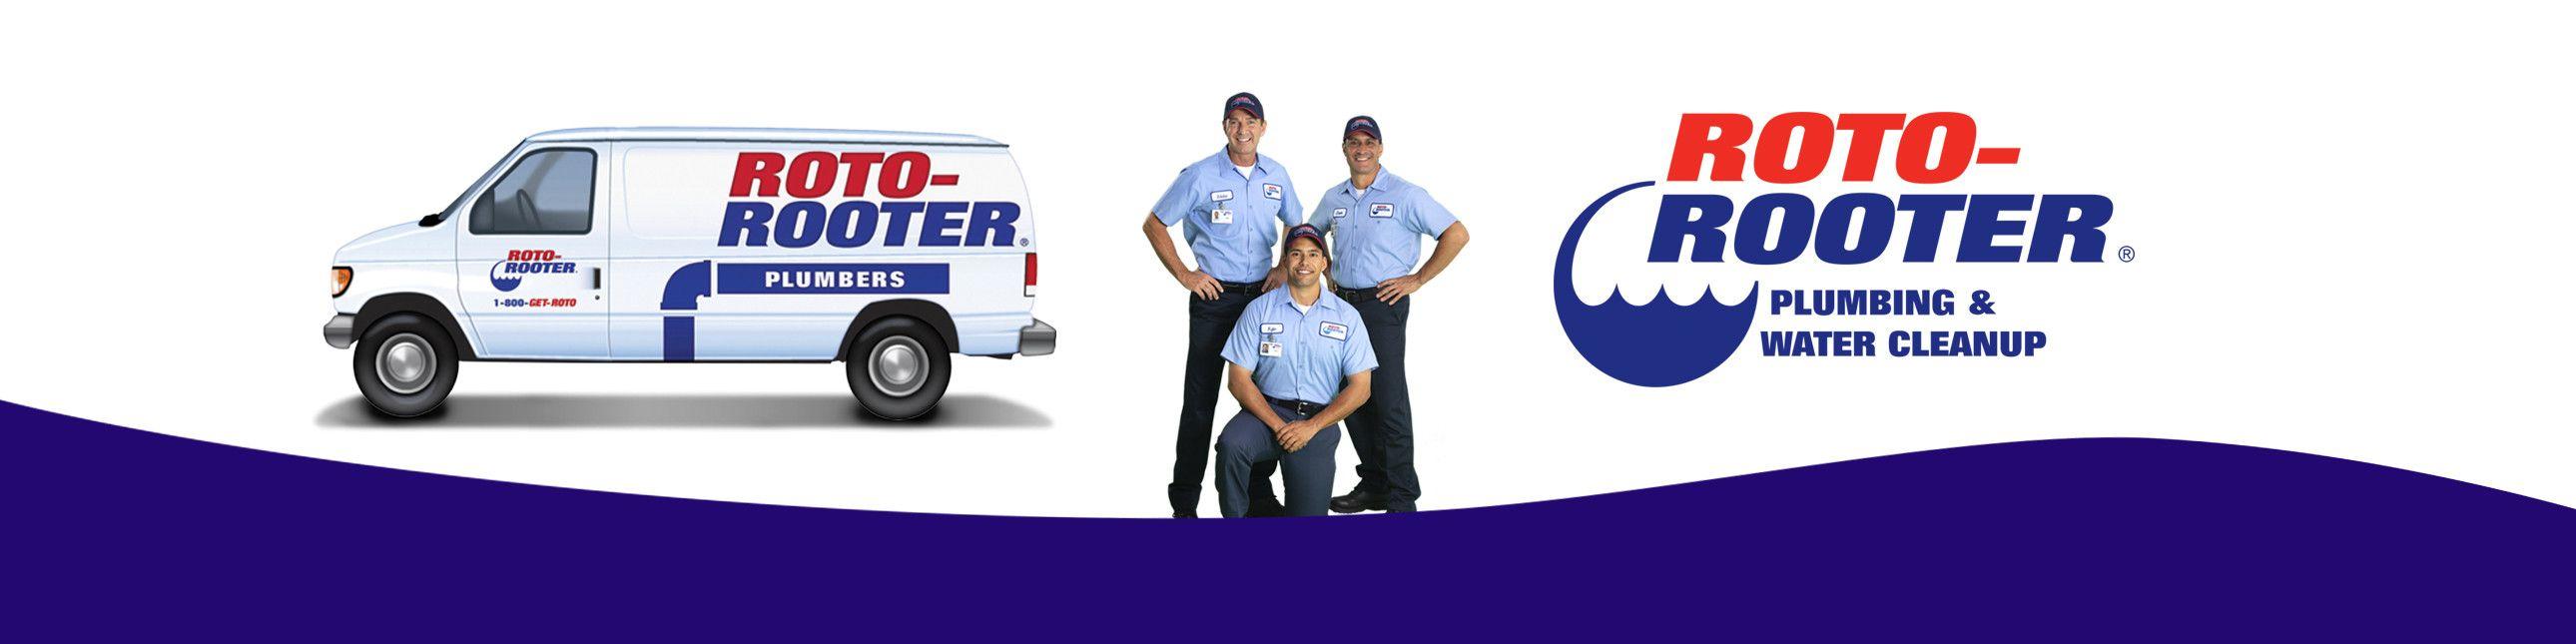 Roto-Rooter Logo - Roto-Rooter Plumbing and Drain Service | LinkedIn